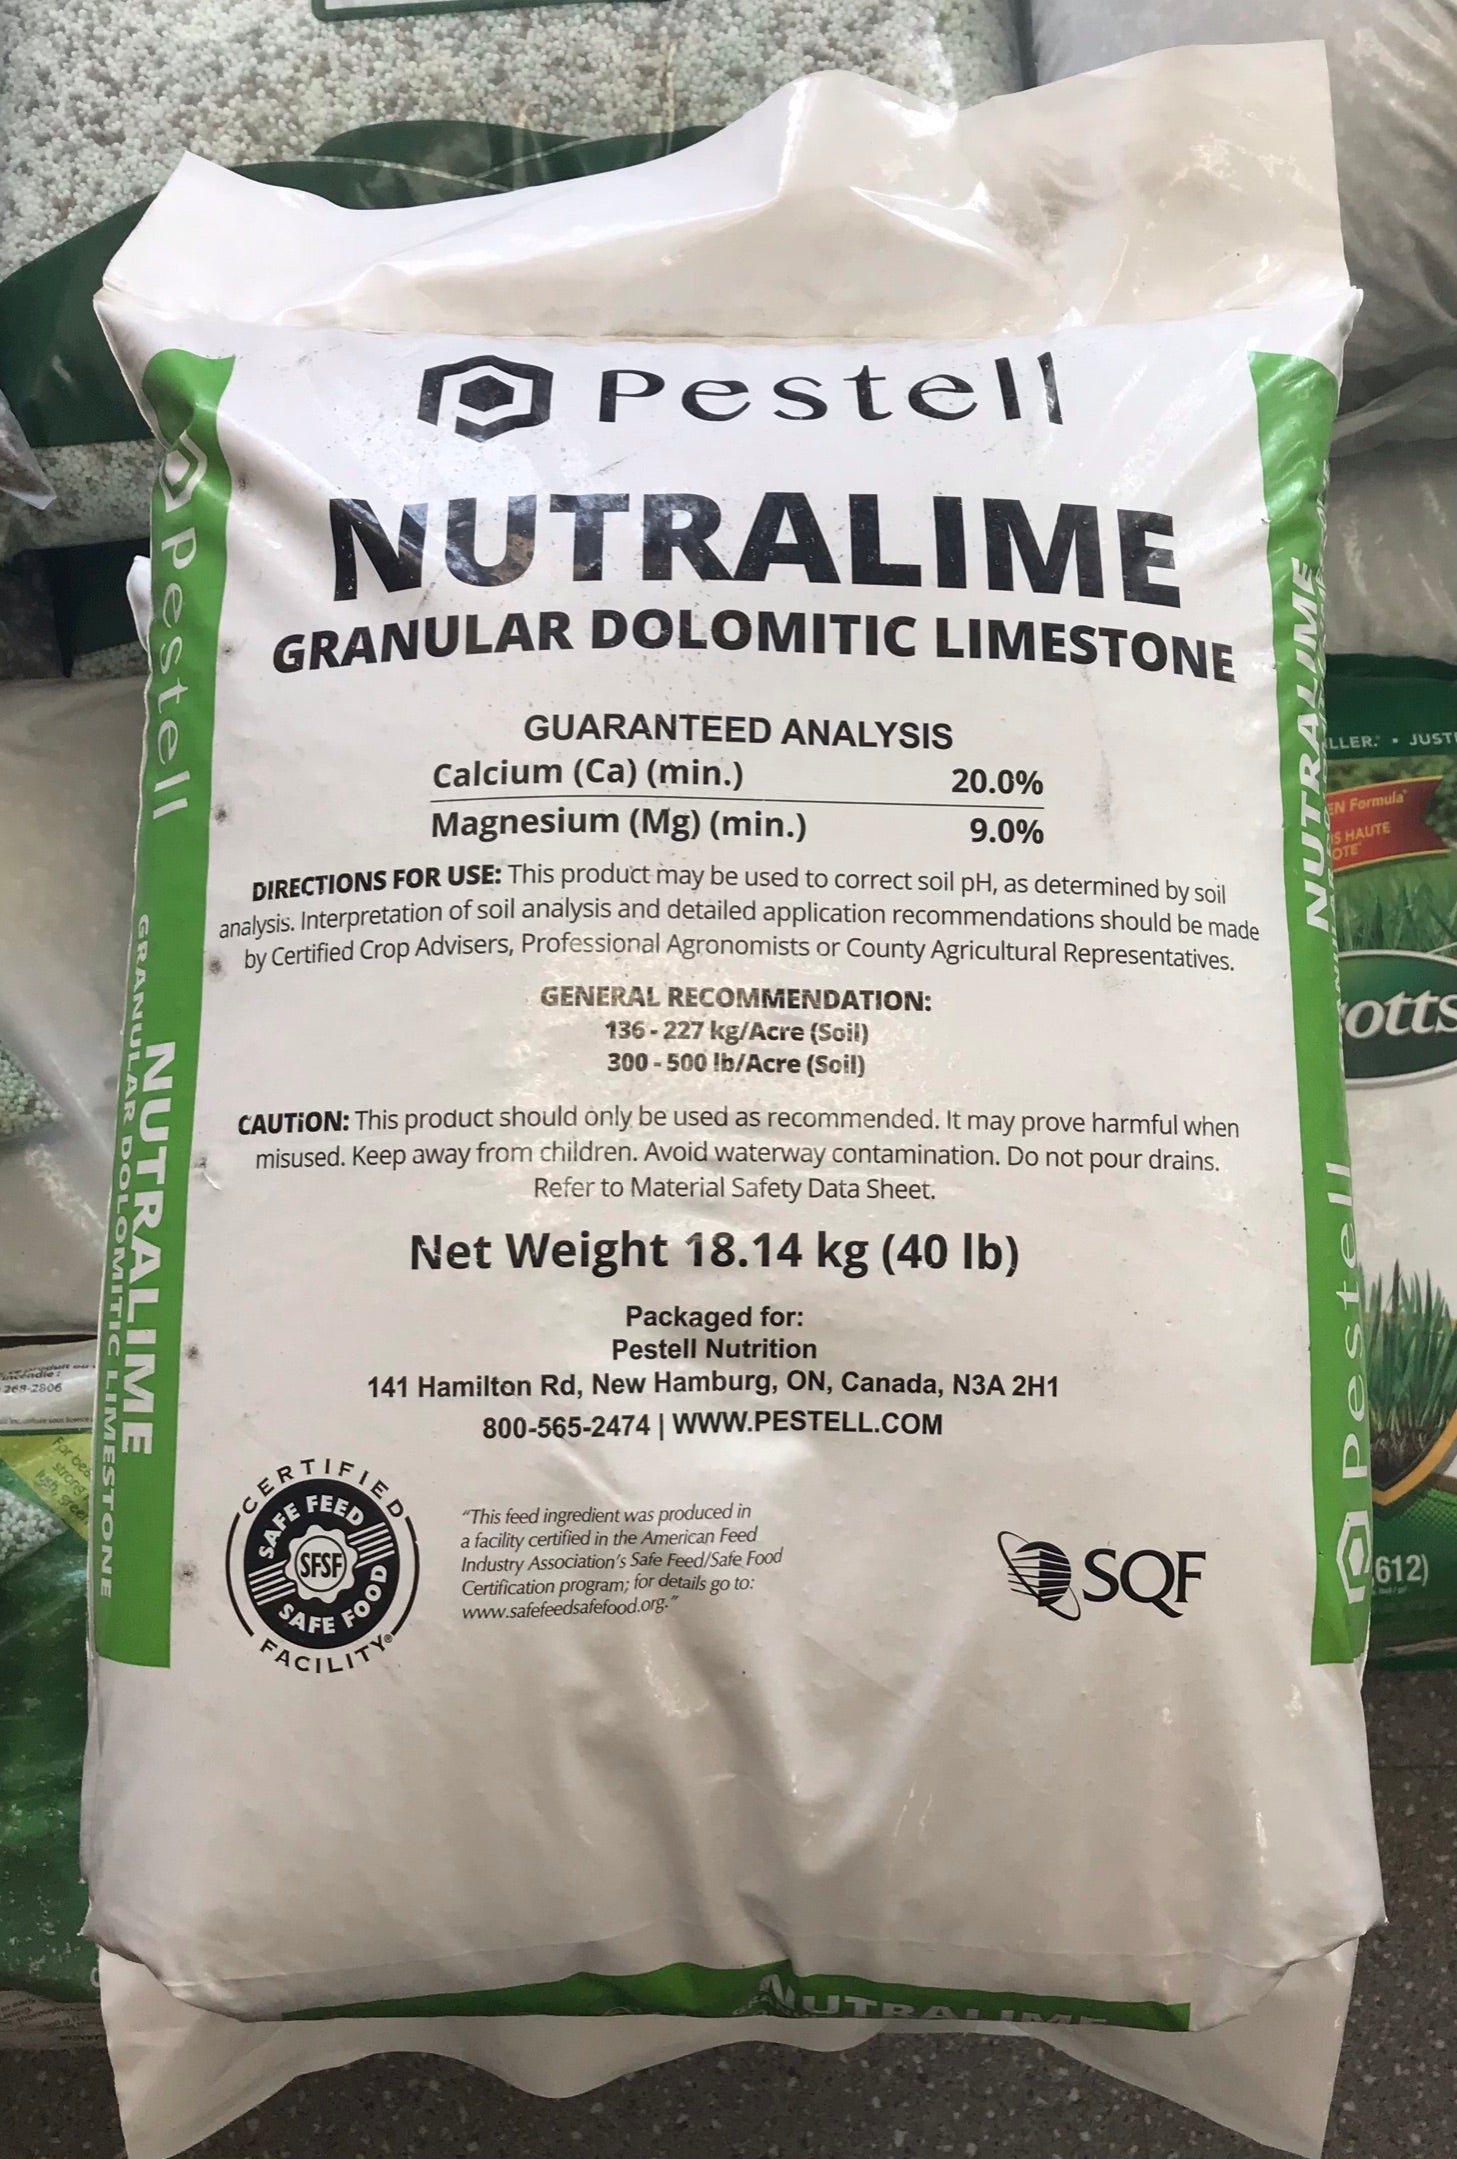 Nutralime Granular Dolomitic Limestone - 40lb Bag